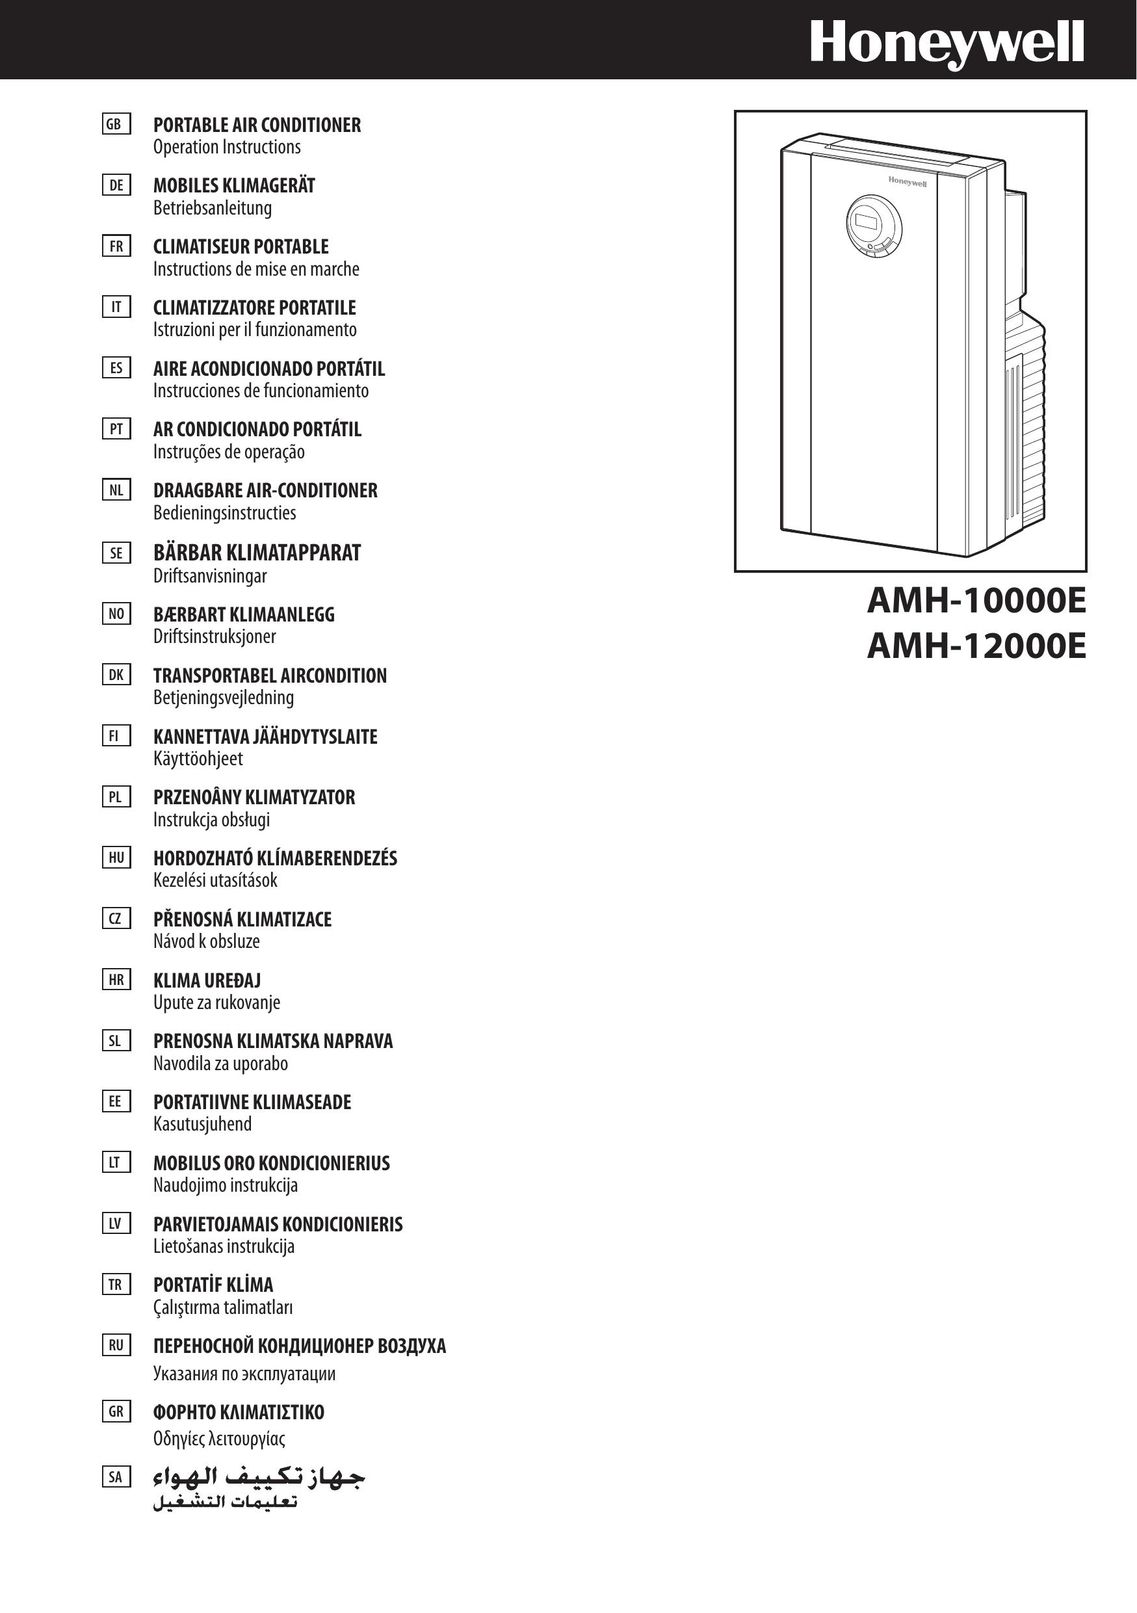 Honeywell AMH-12000E Air Conditioner User Manual